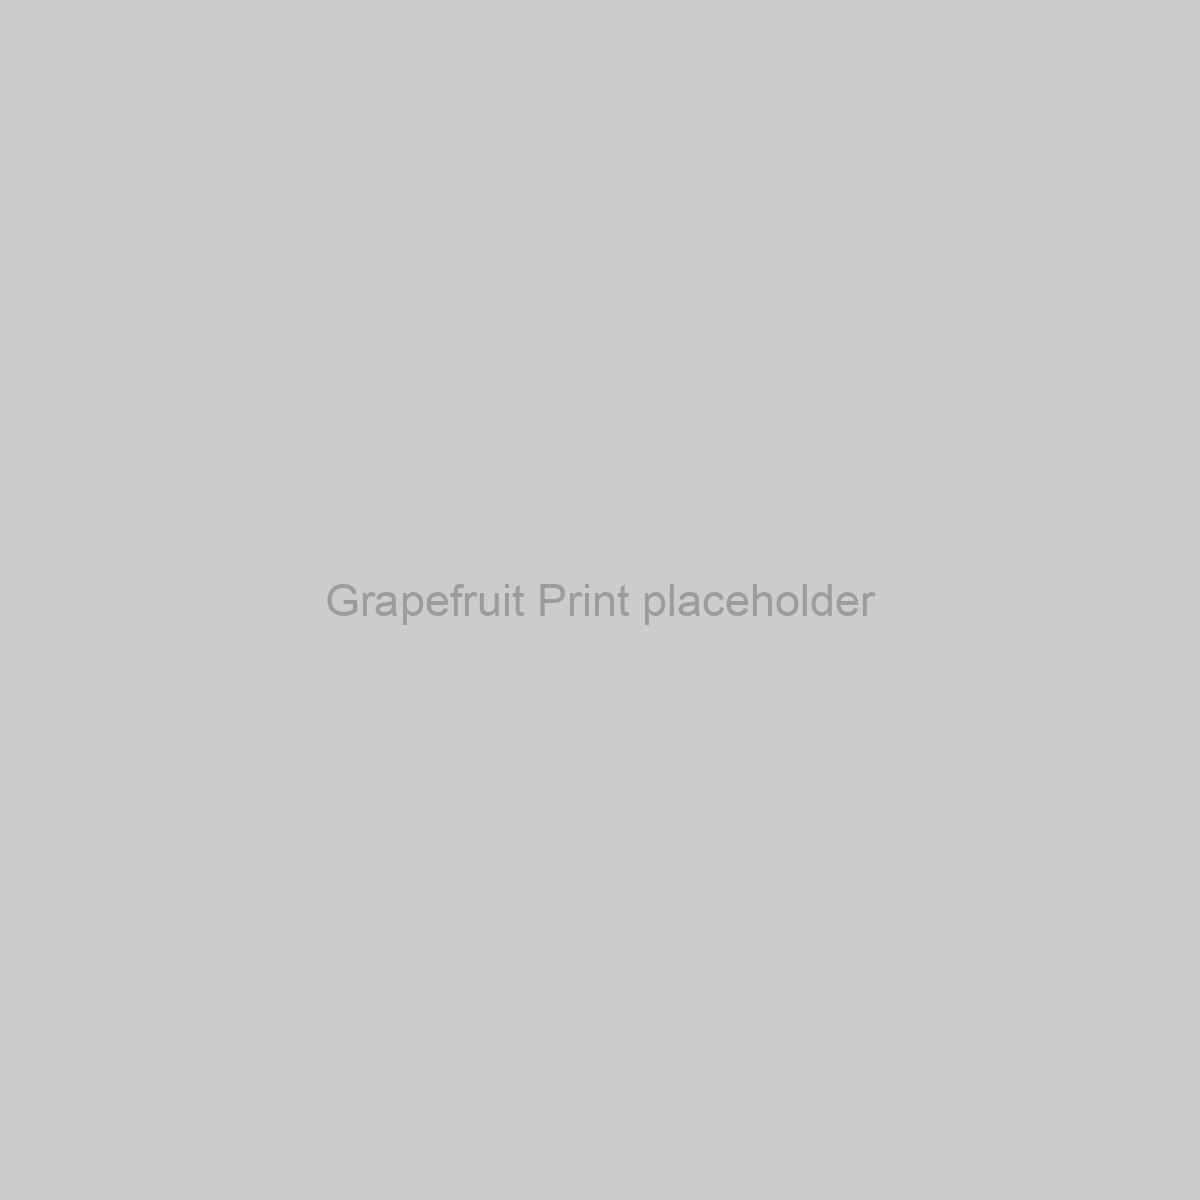 Grapefruit Print Placeholder Image